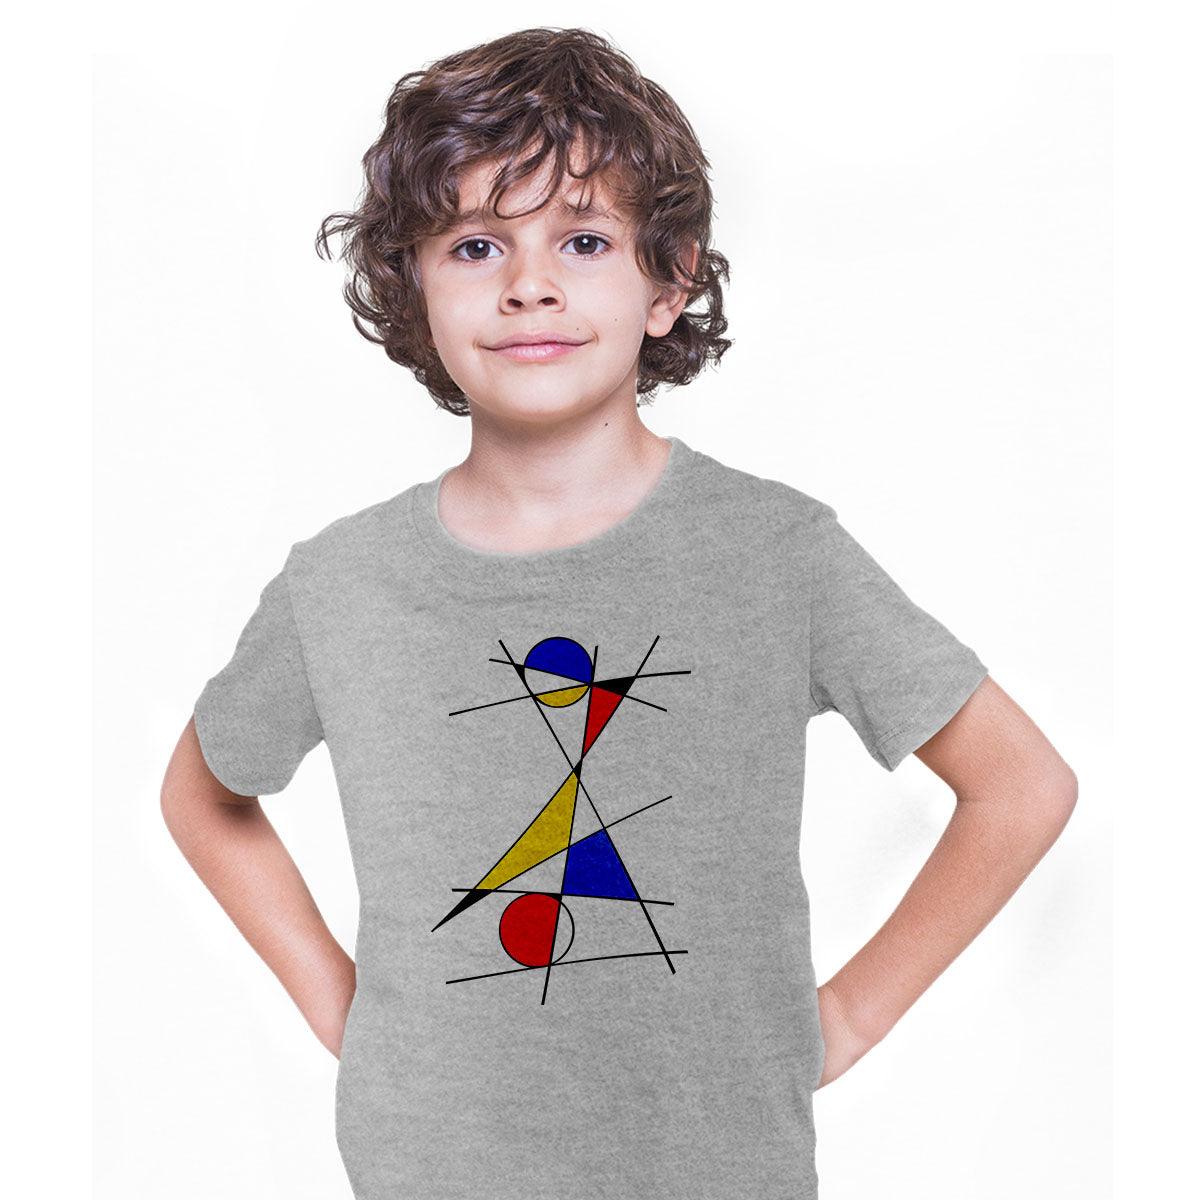 Bauhaus Art Tee Typography T-shirt for Kids - Kuzi Tees